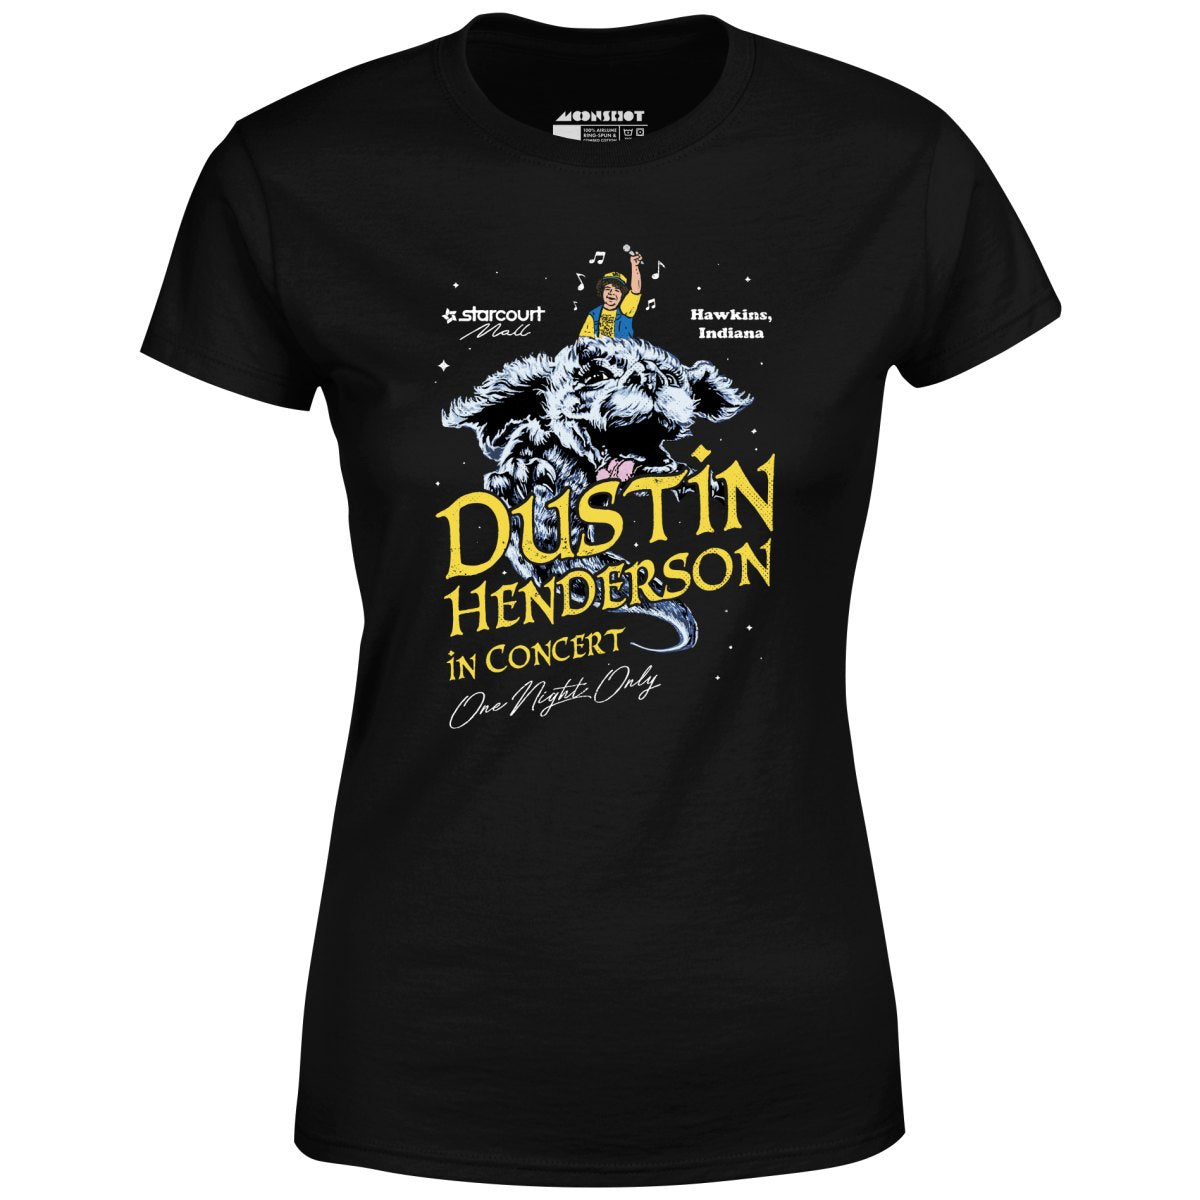 Dustin Henderson in Concert - Women's T-Shirt